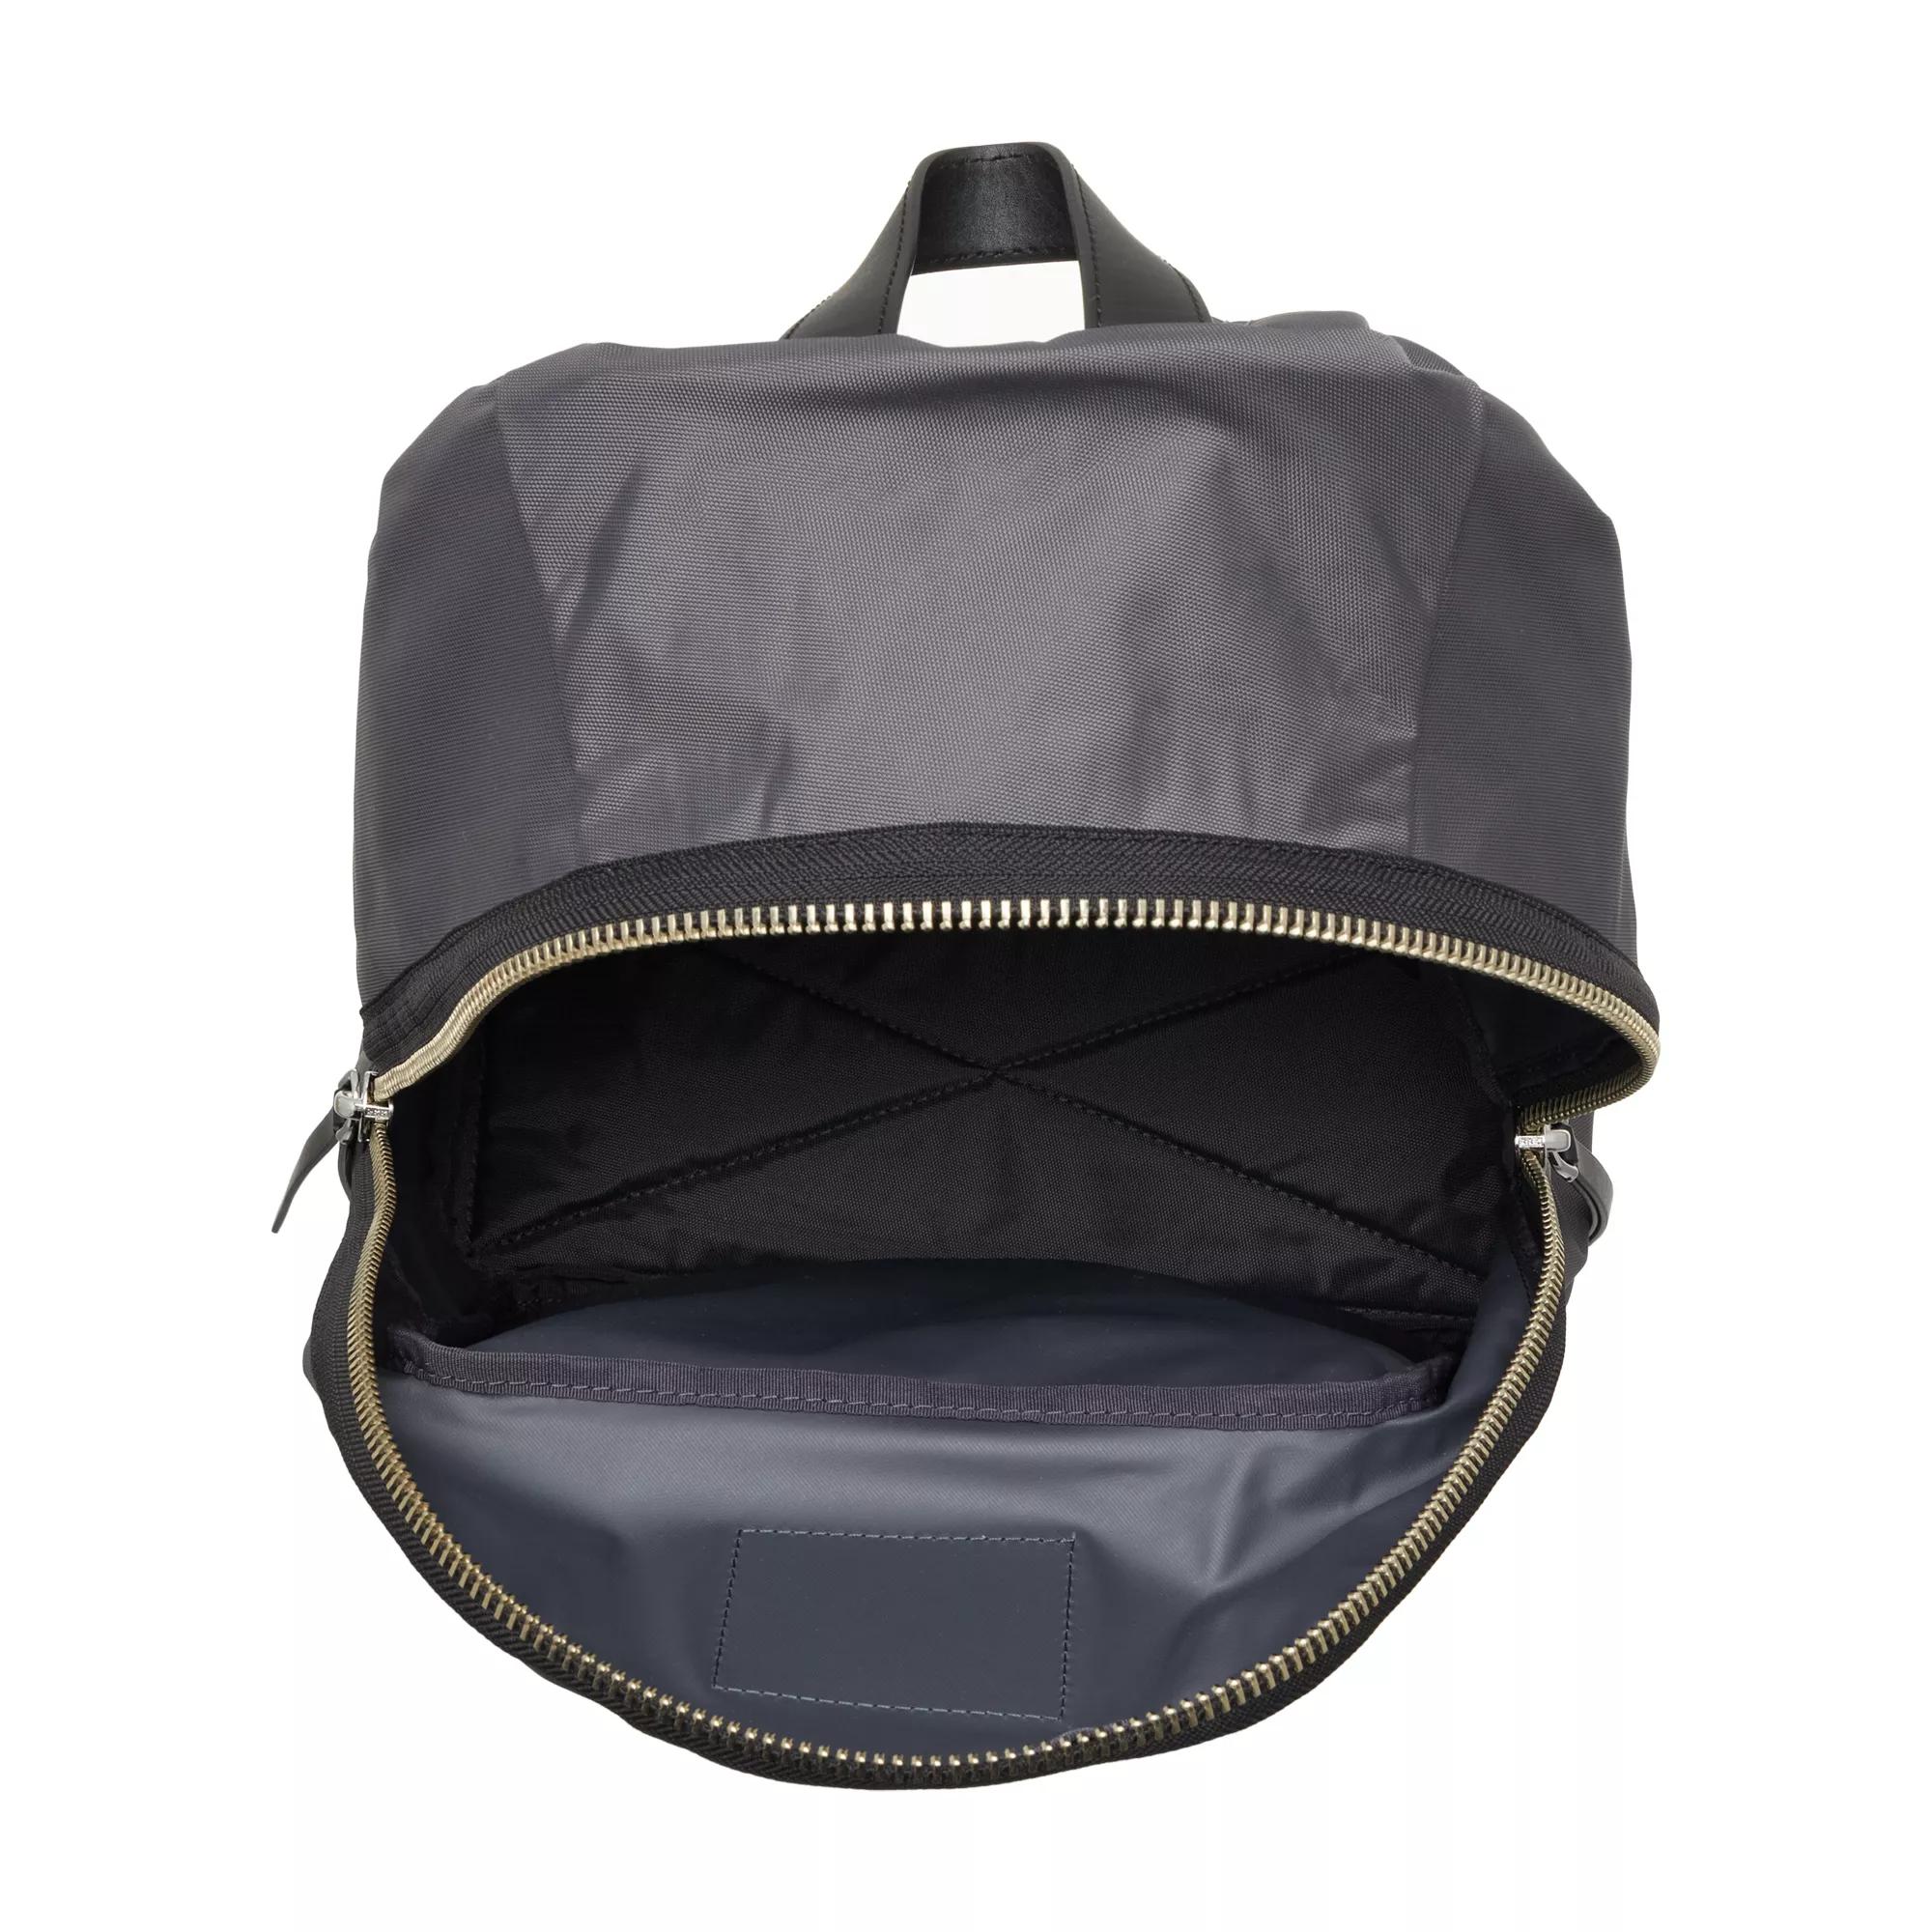 Marc Jacobs Rugzakken The Large Backpack in grijs